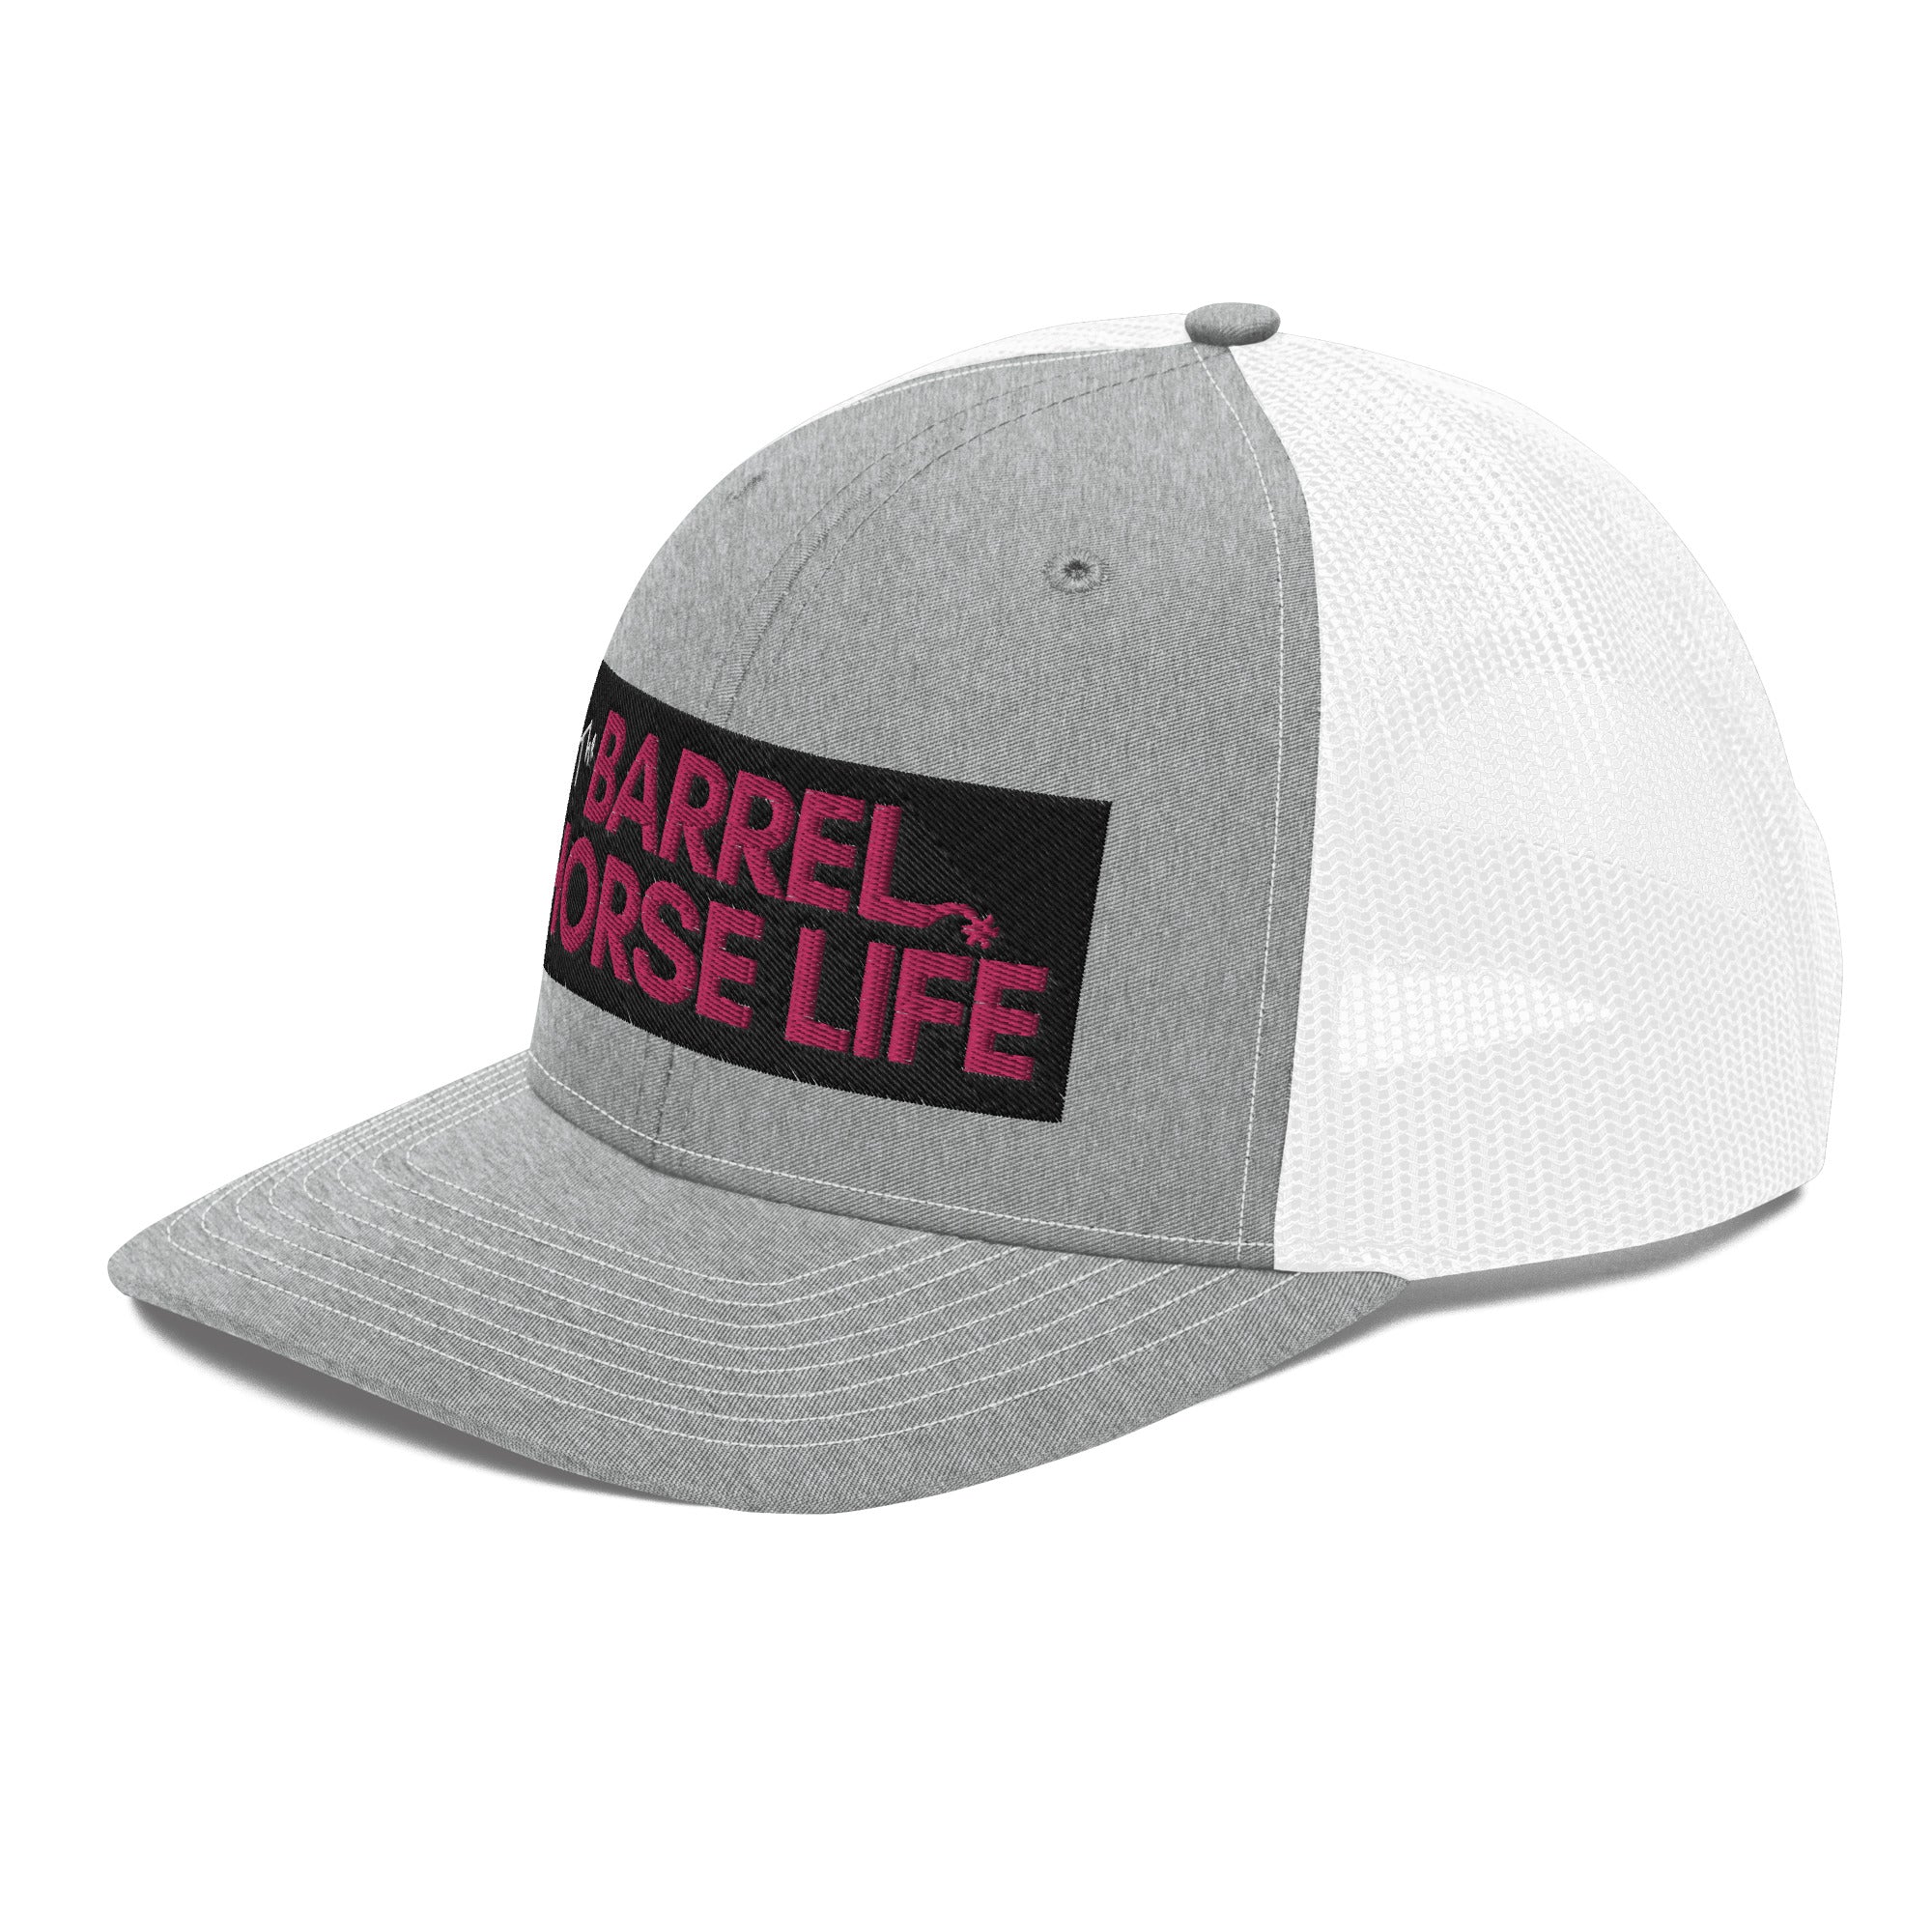 The Barrel Horse Life Hat (Richardson Hat, pink logo)